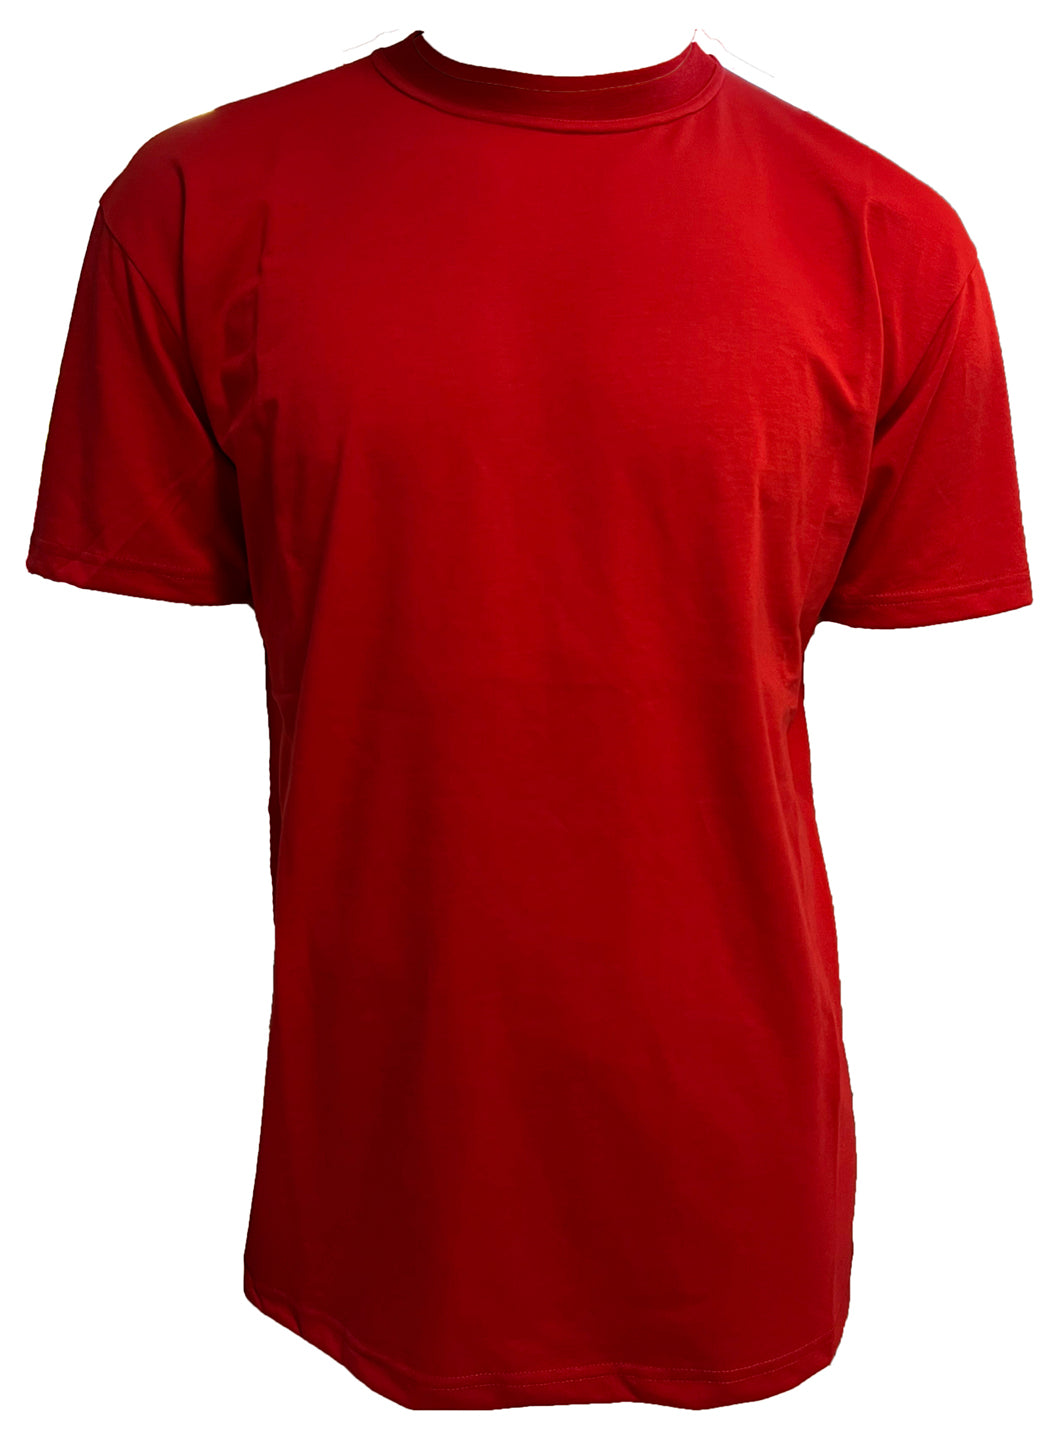 Lanssi, Julle T-shirt, short sleeve